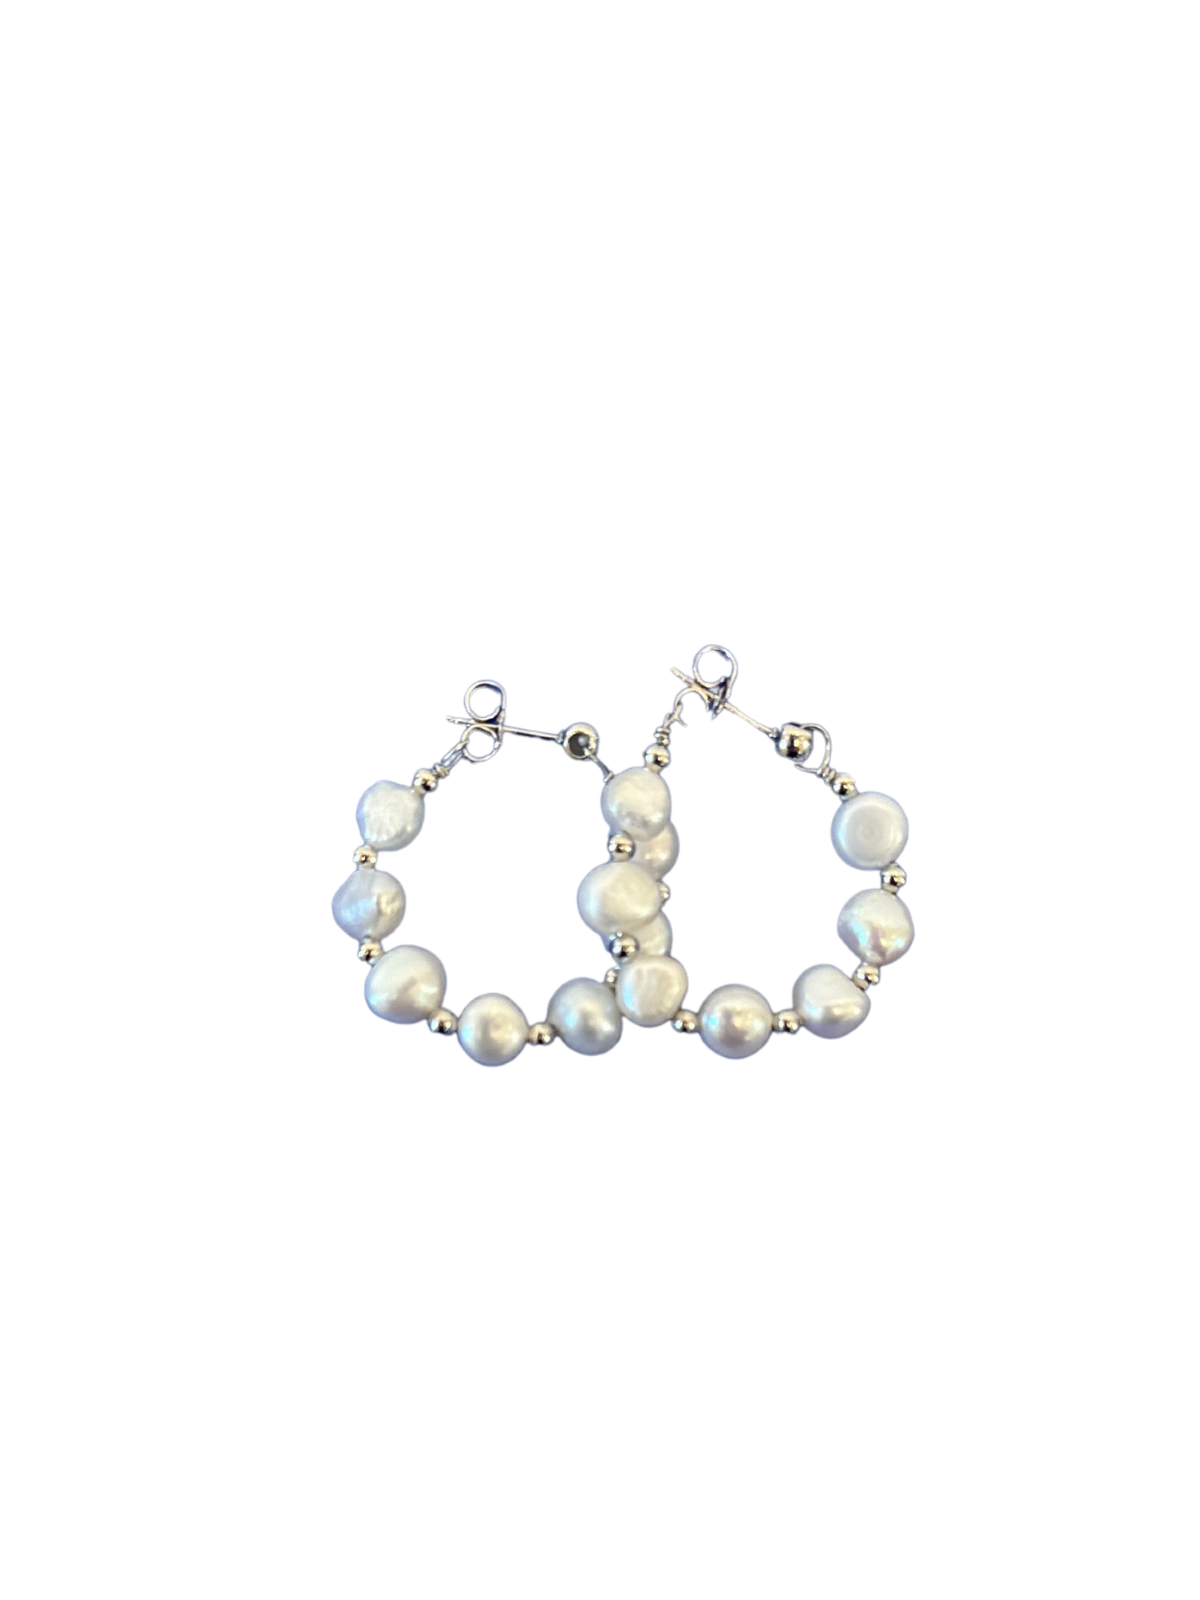 Black Onyx or Pearl Earring, Designer Earring, Multi Semiprecious Cabochon  Earring, 925 Silver Earring, Gift for Her, Dangle or Drop Earring - Etsy